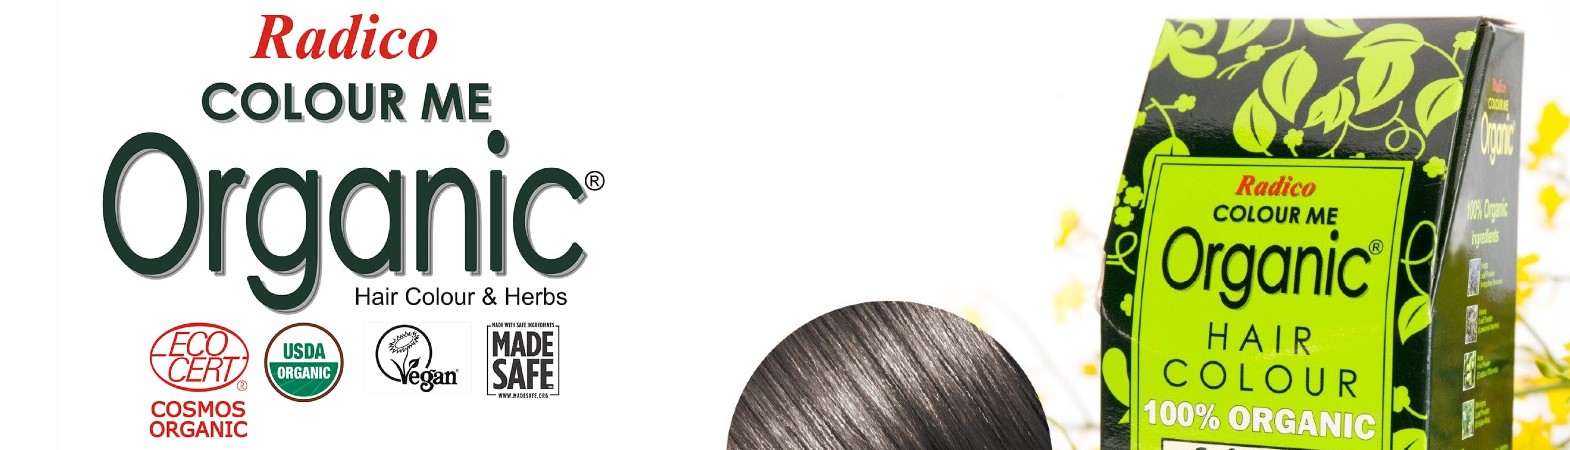 Radico Certified Organic Hair Color | Organic Brands